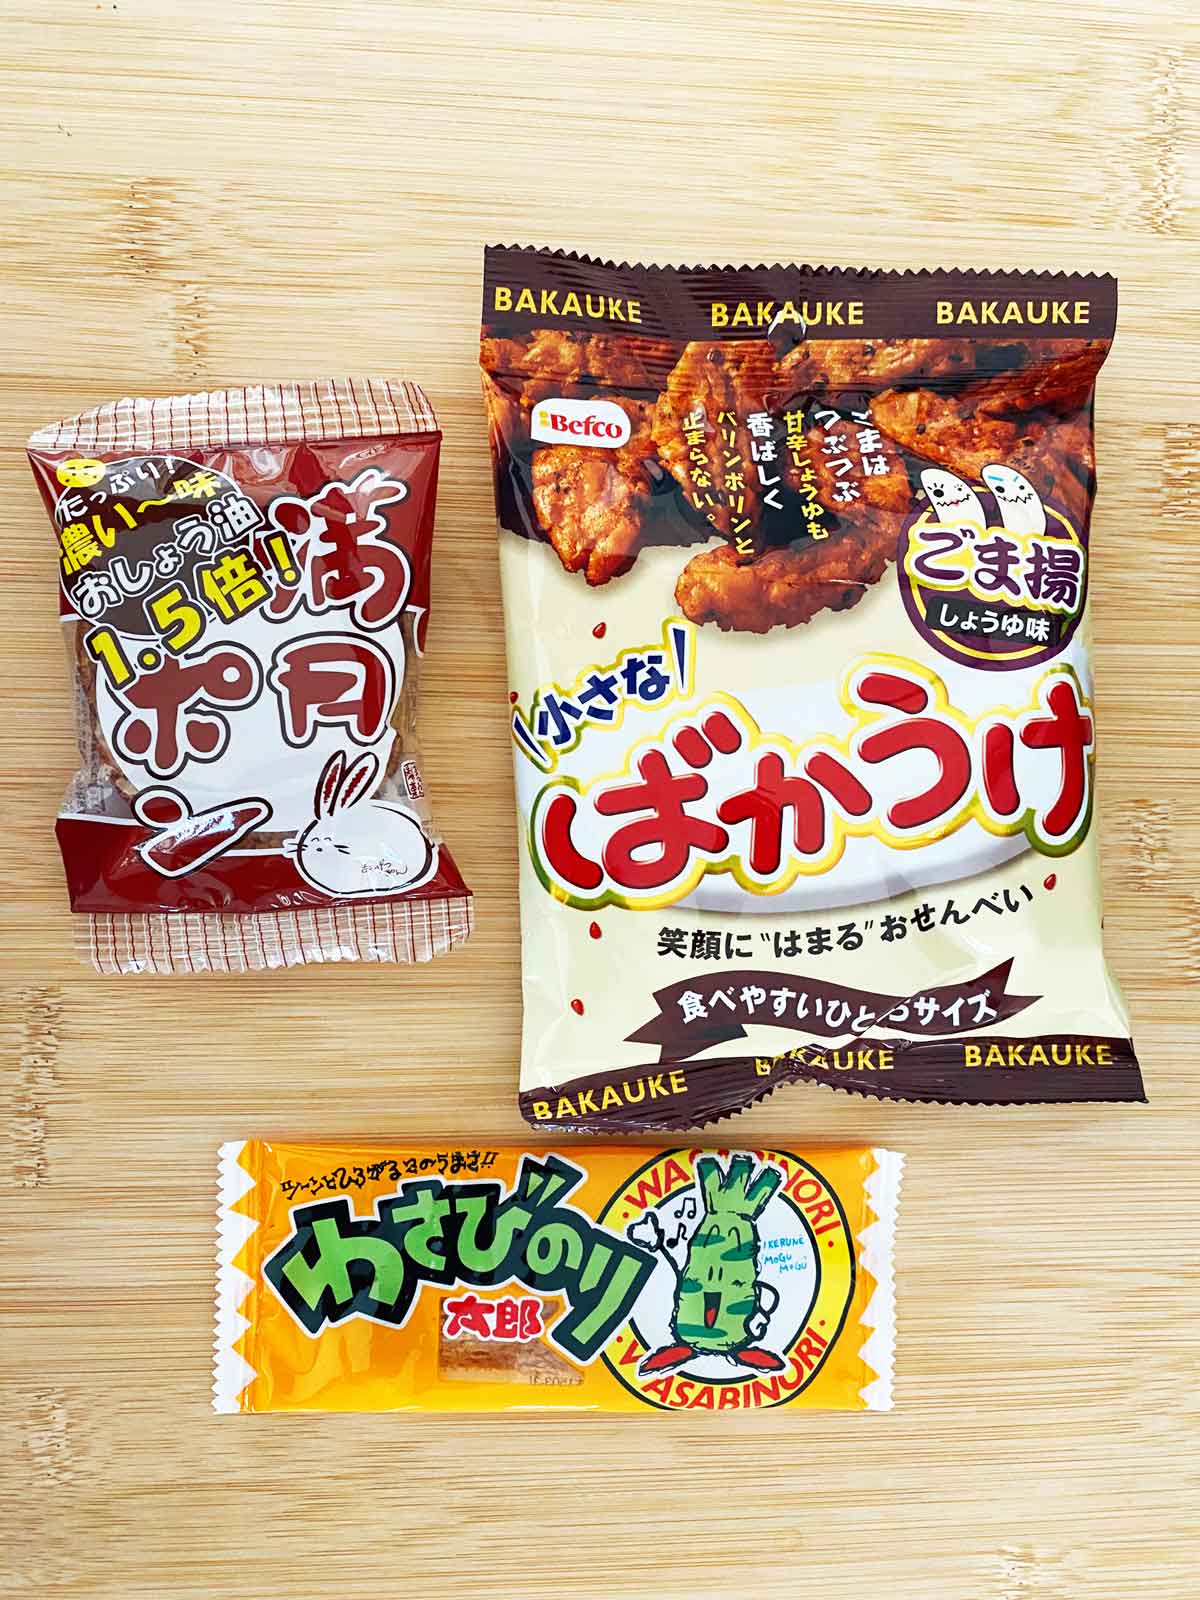 Savoury snacks from the Tokyo Treats box